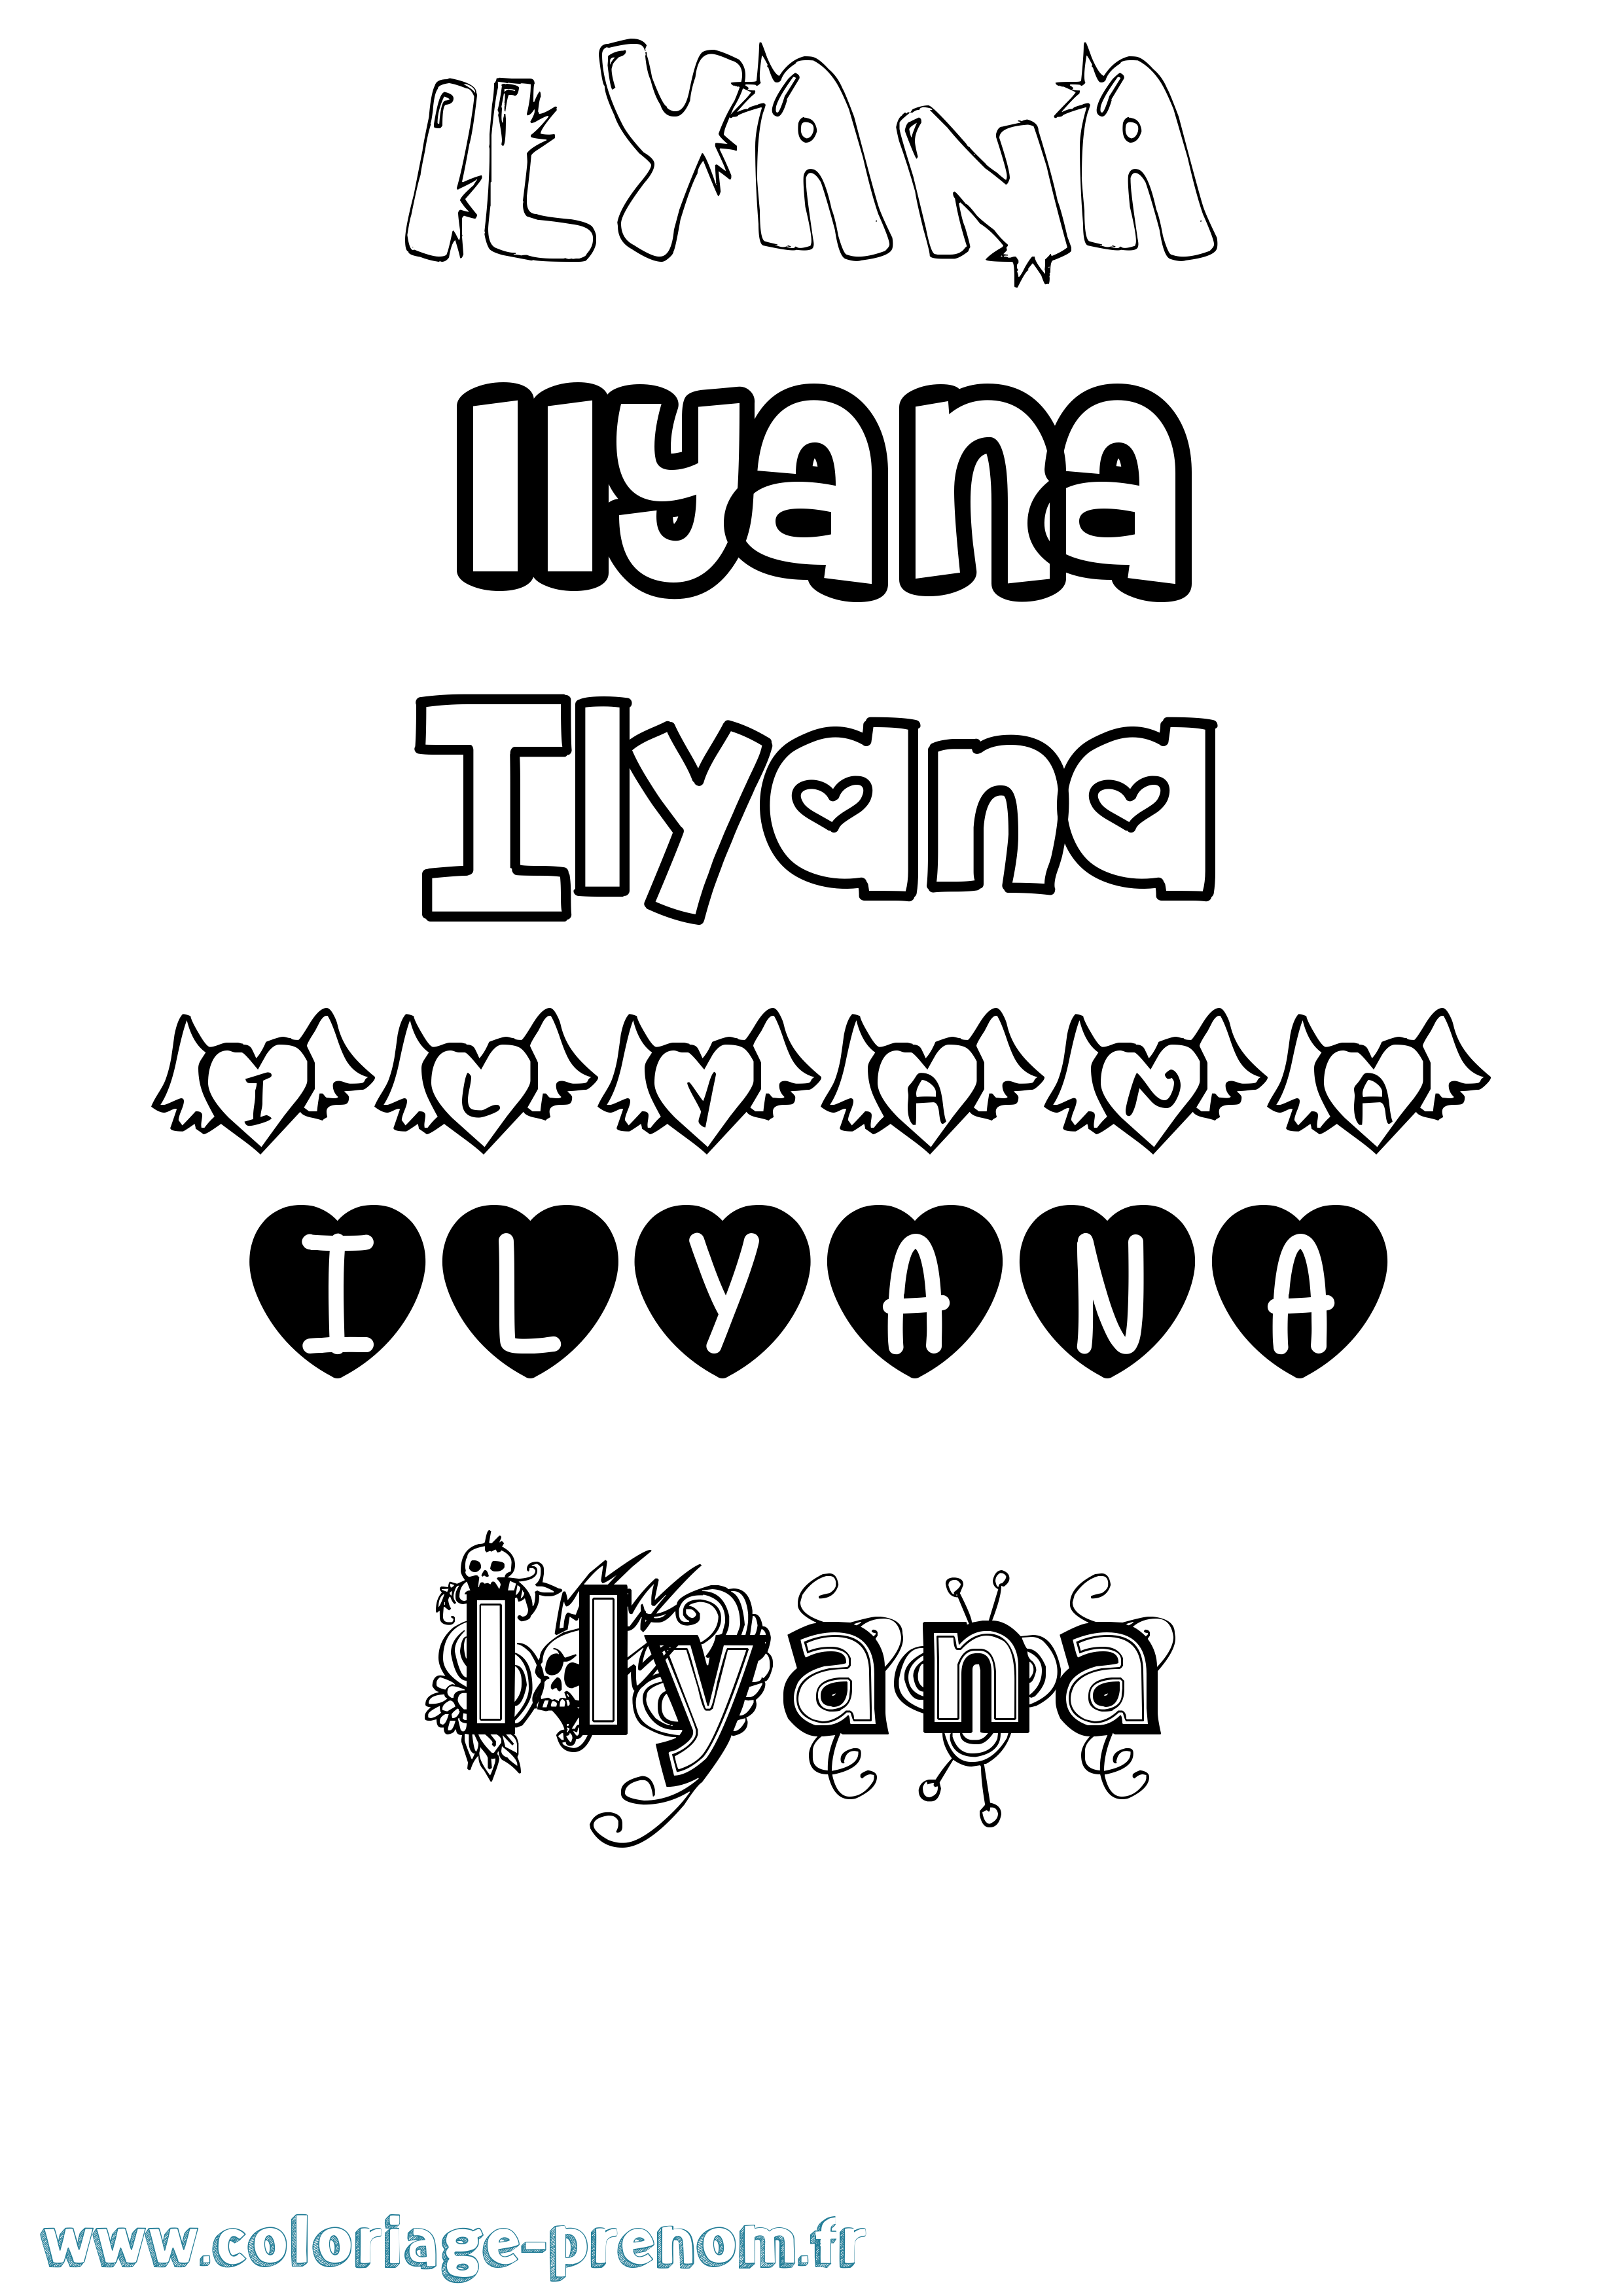 Coloriage prénom Ilyana